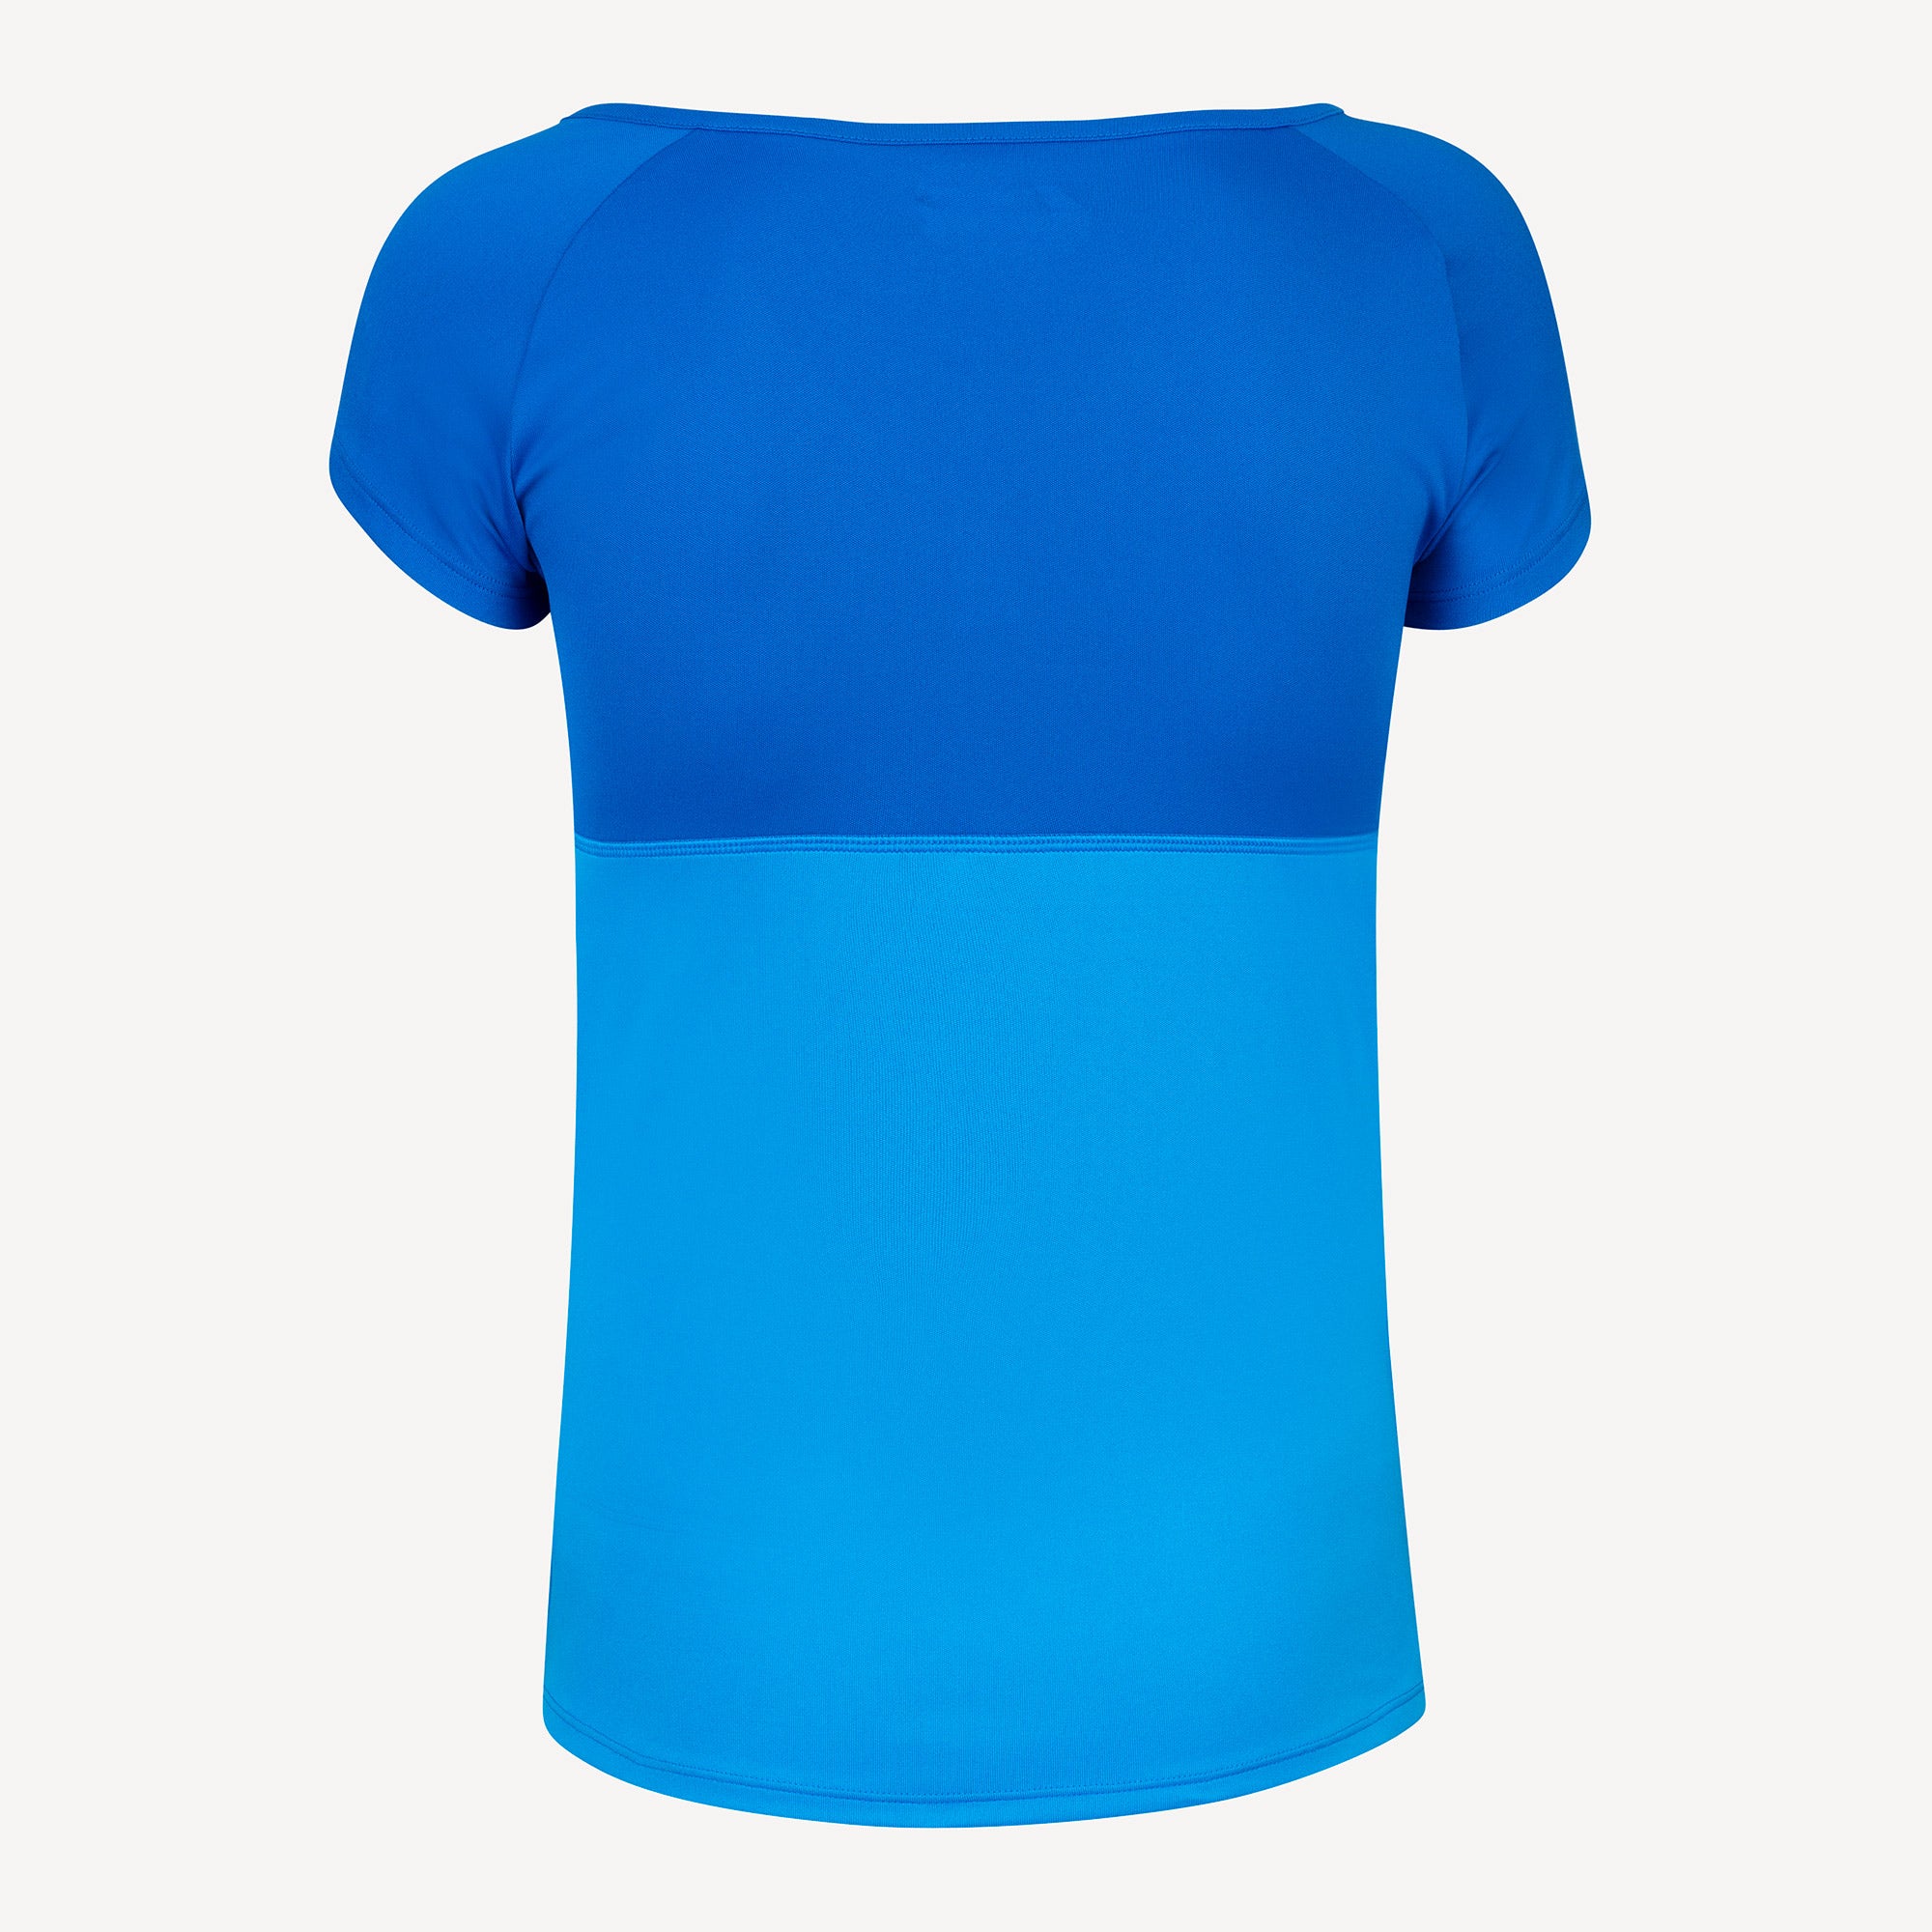 Babolat Play Club Women's Tennis Shirt Blue (2)